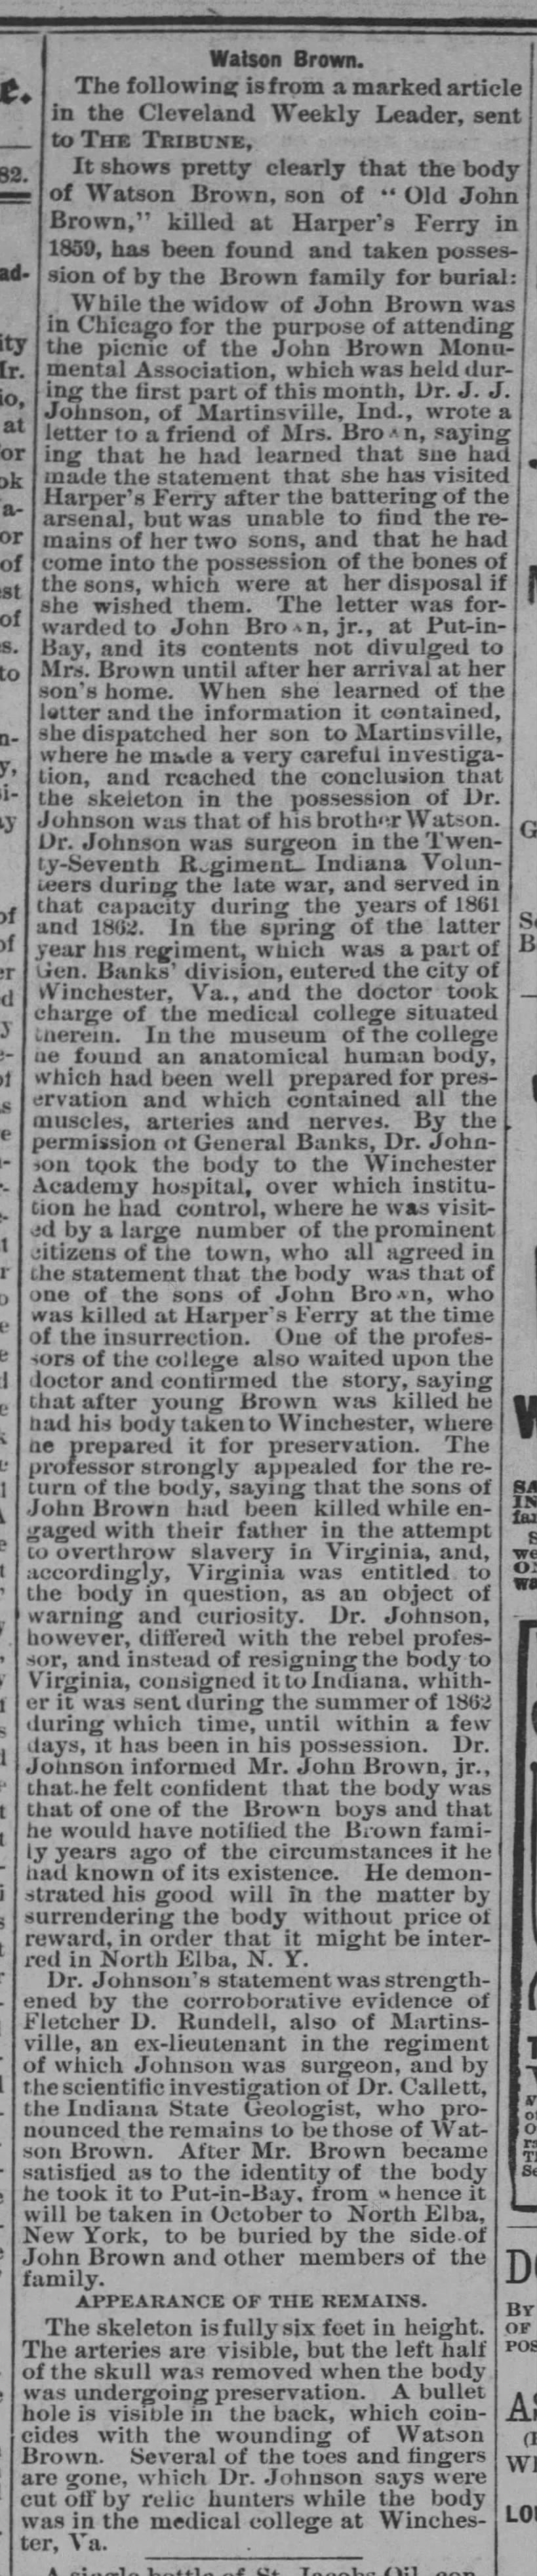 The body of Watson Brown, John Brown's son